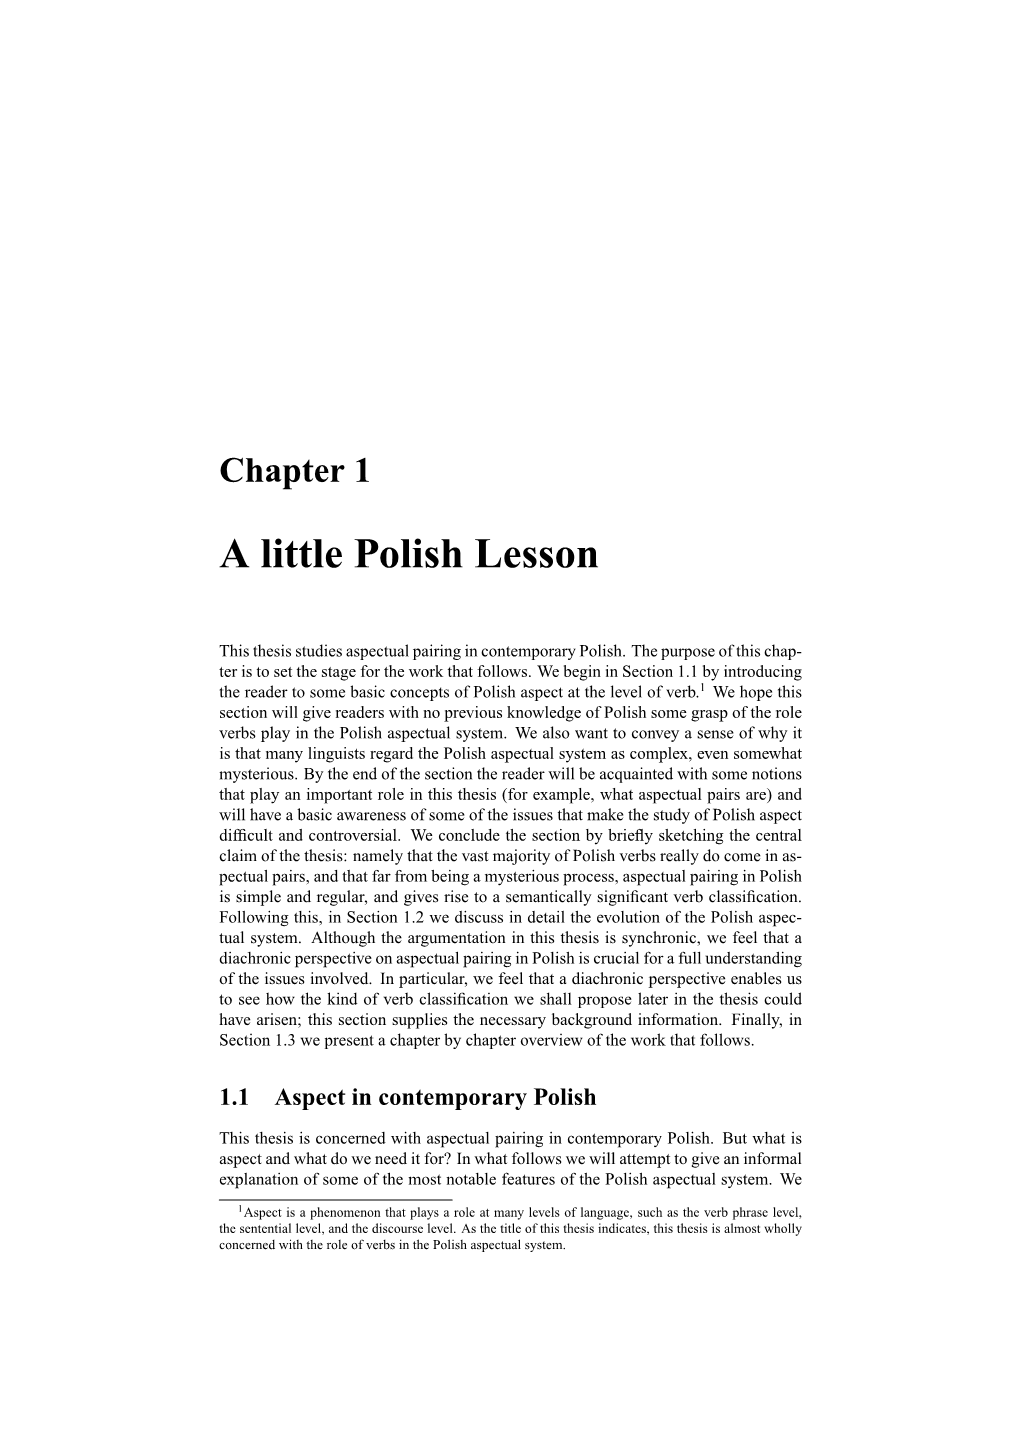 A Little Polish Lesson